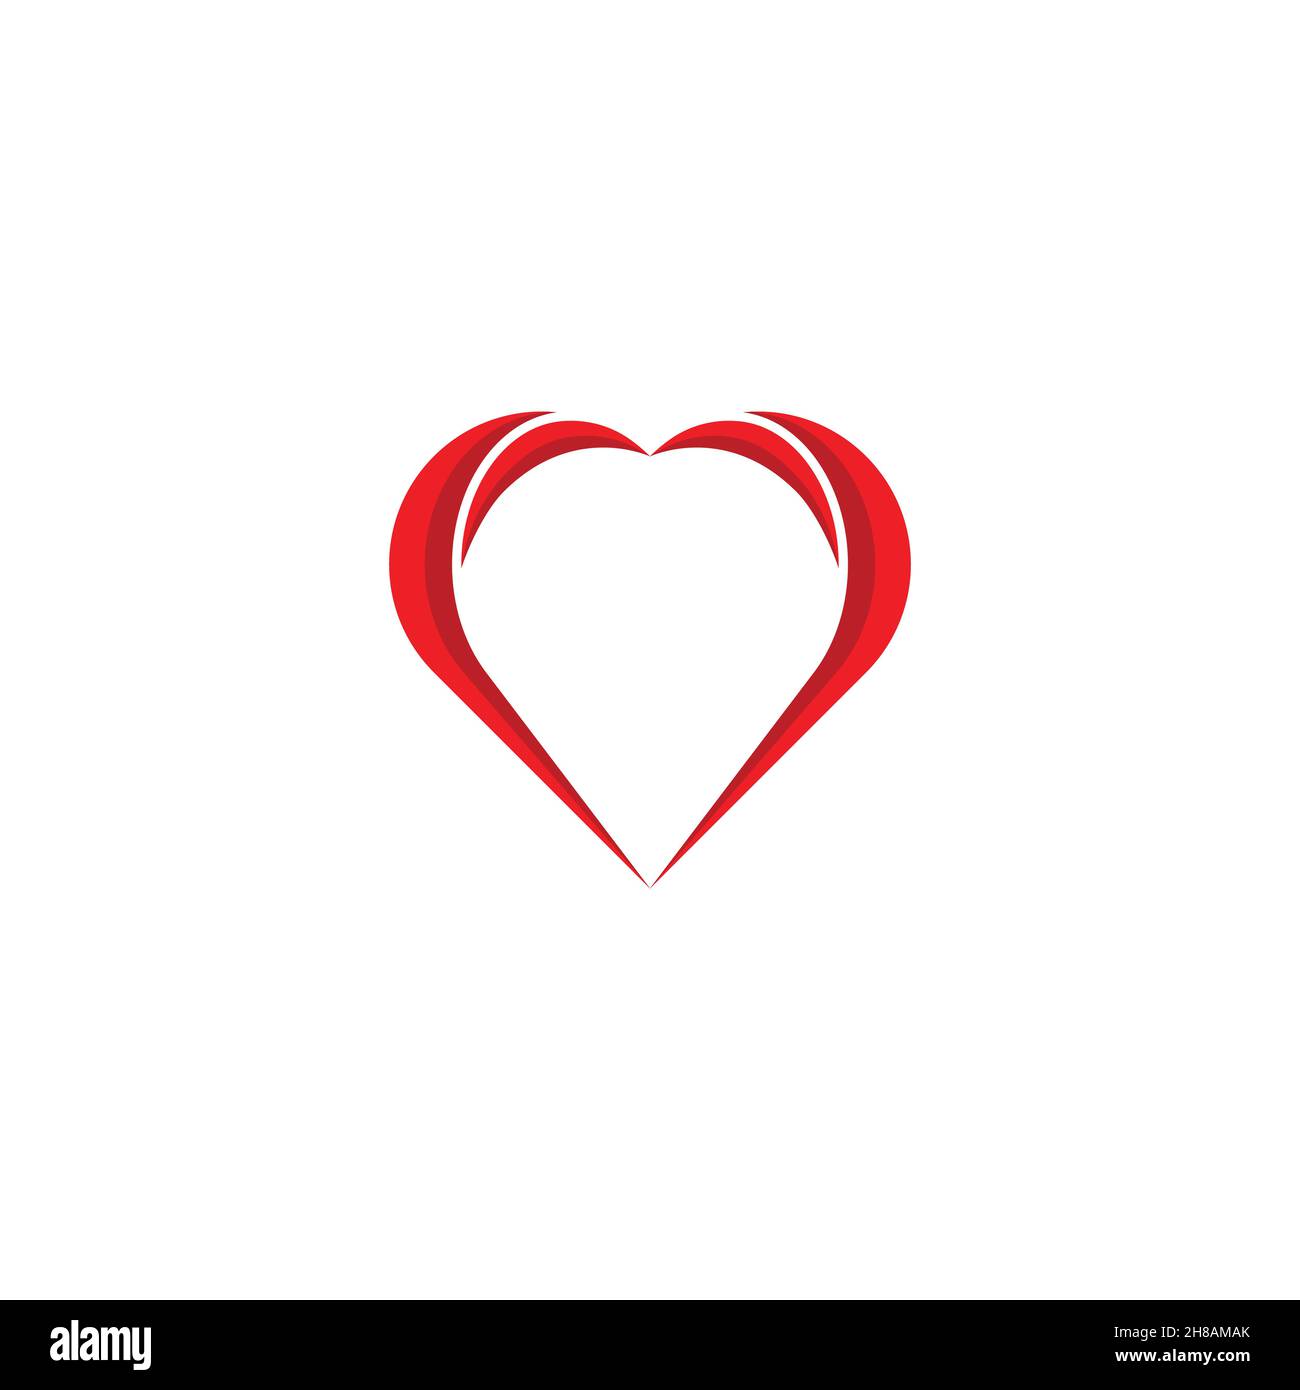 heart logo design ideas